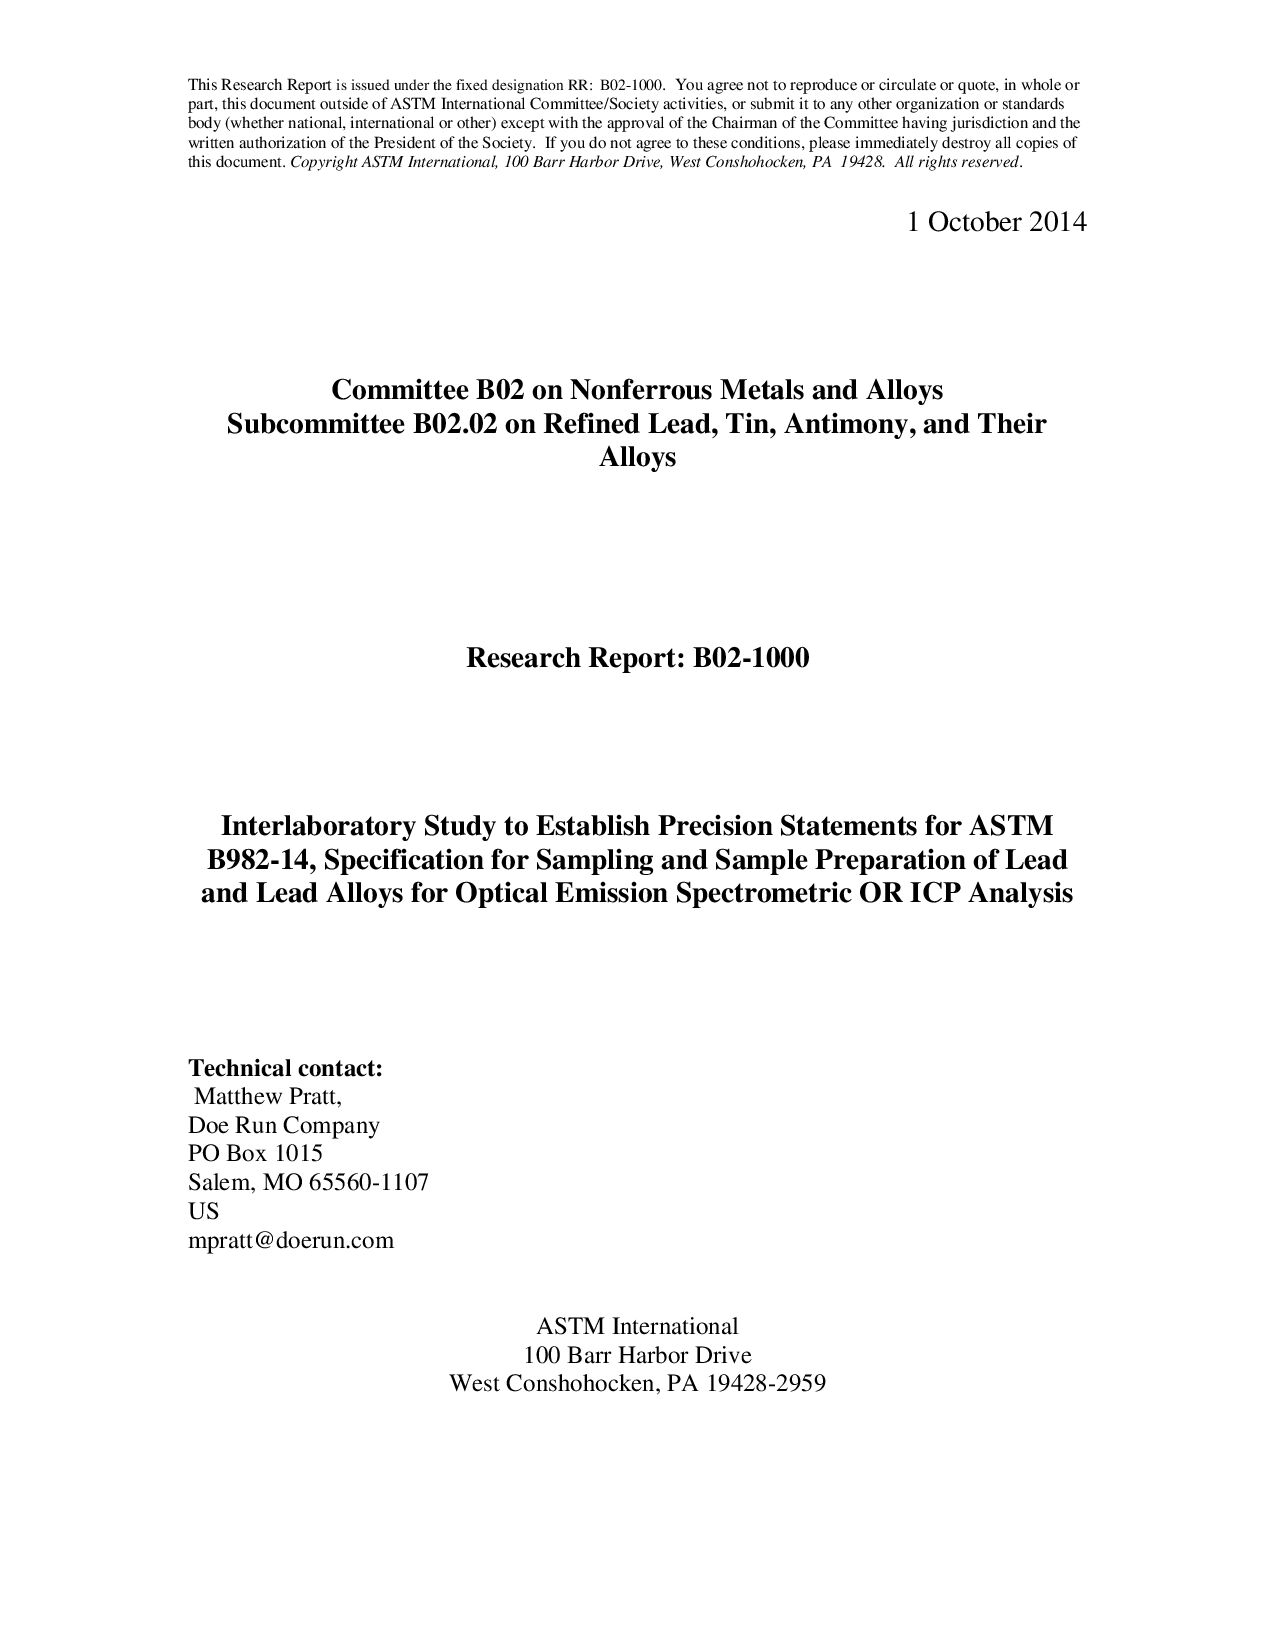 ASTM RR-B02-1000 2014封面图